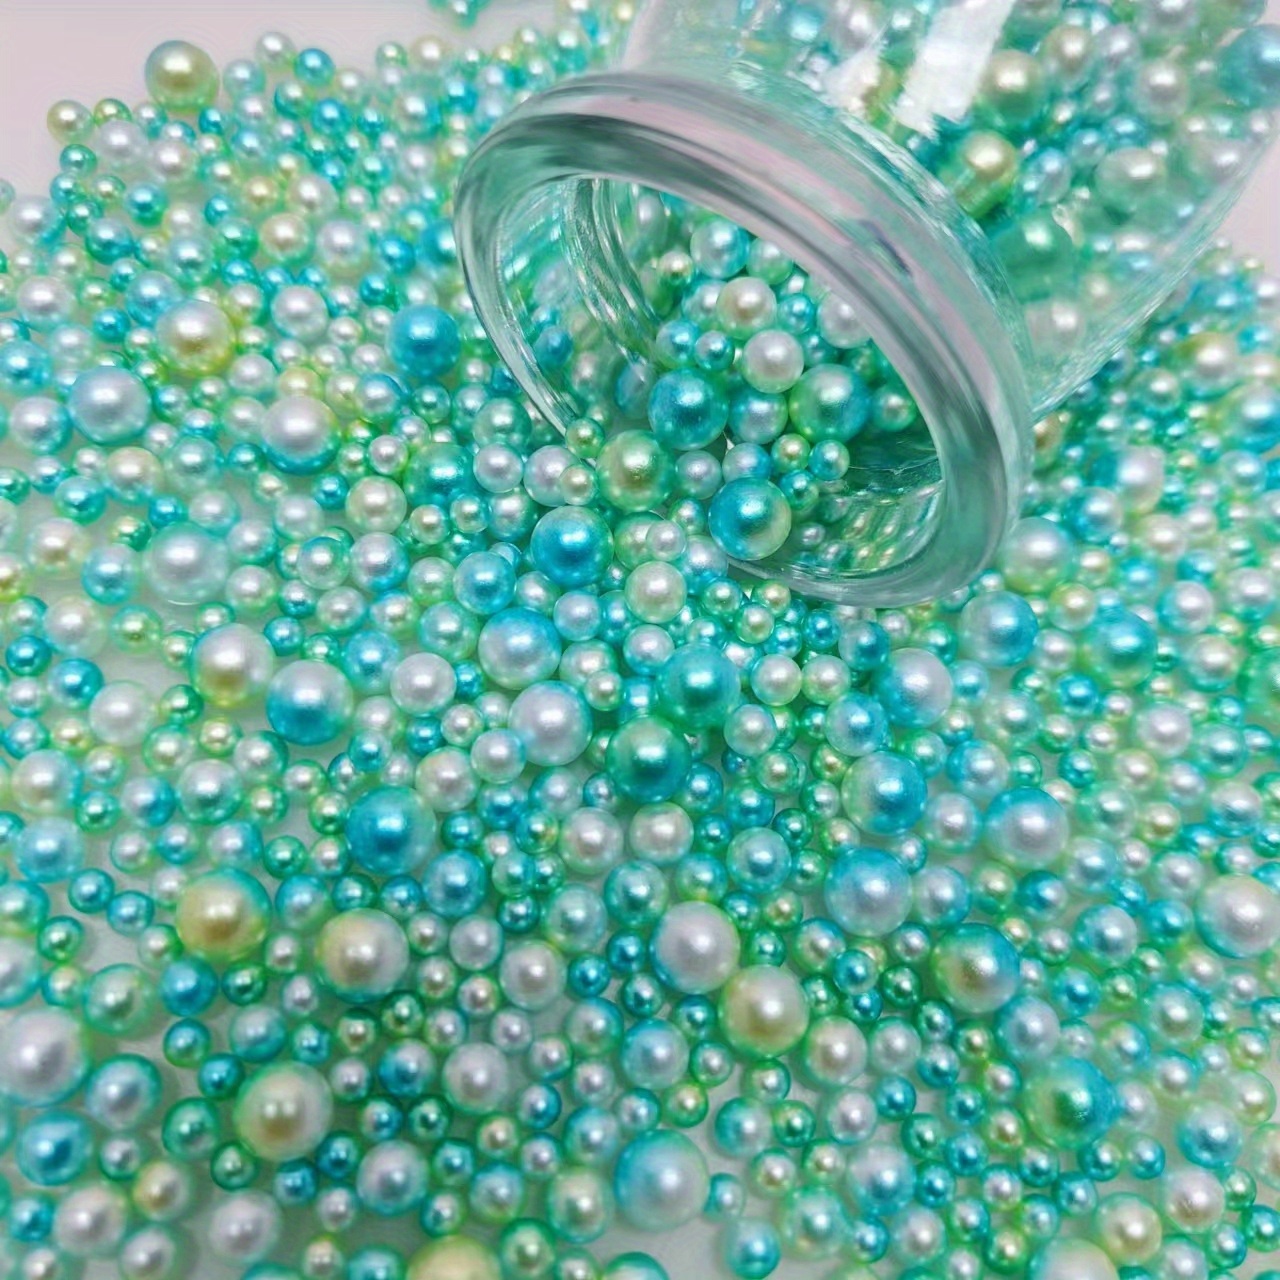 Galaxy Mermaid Half Pearl, ABS Pearls in Rainbow Gradient Color, Kaw, MiniatureSweet, Kawaii Resin Crafts, Decoden Cabochons Supplies